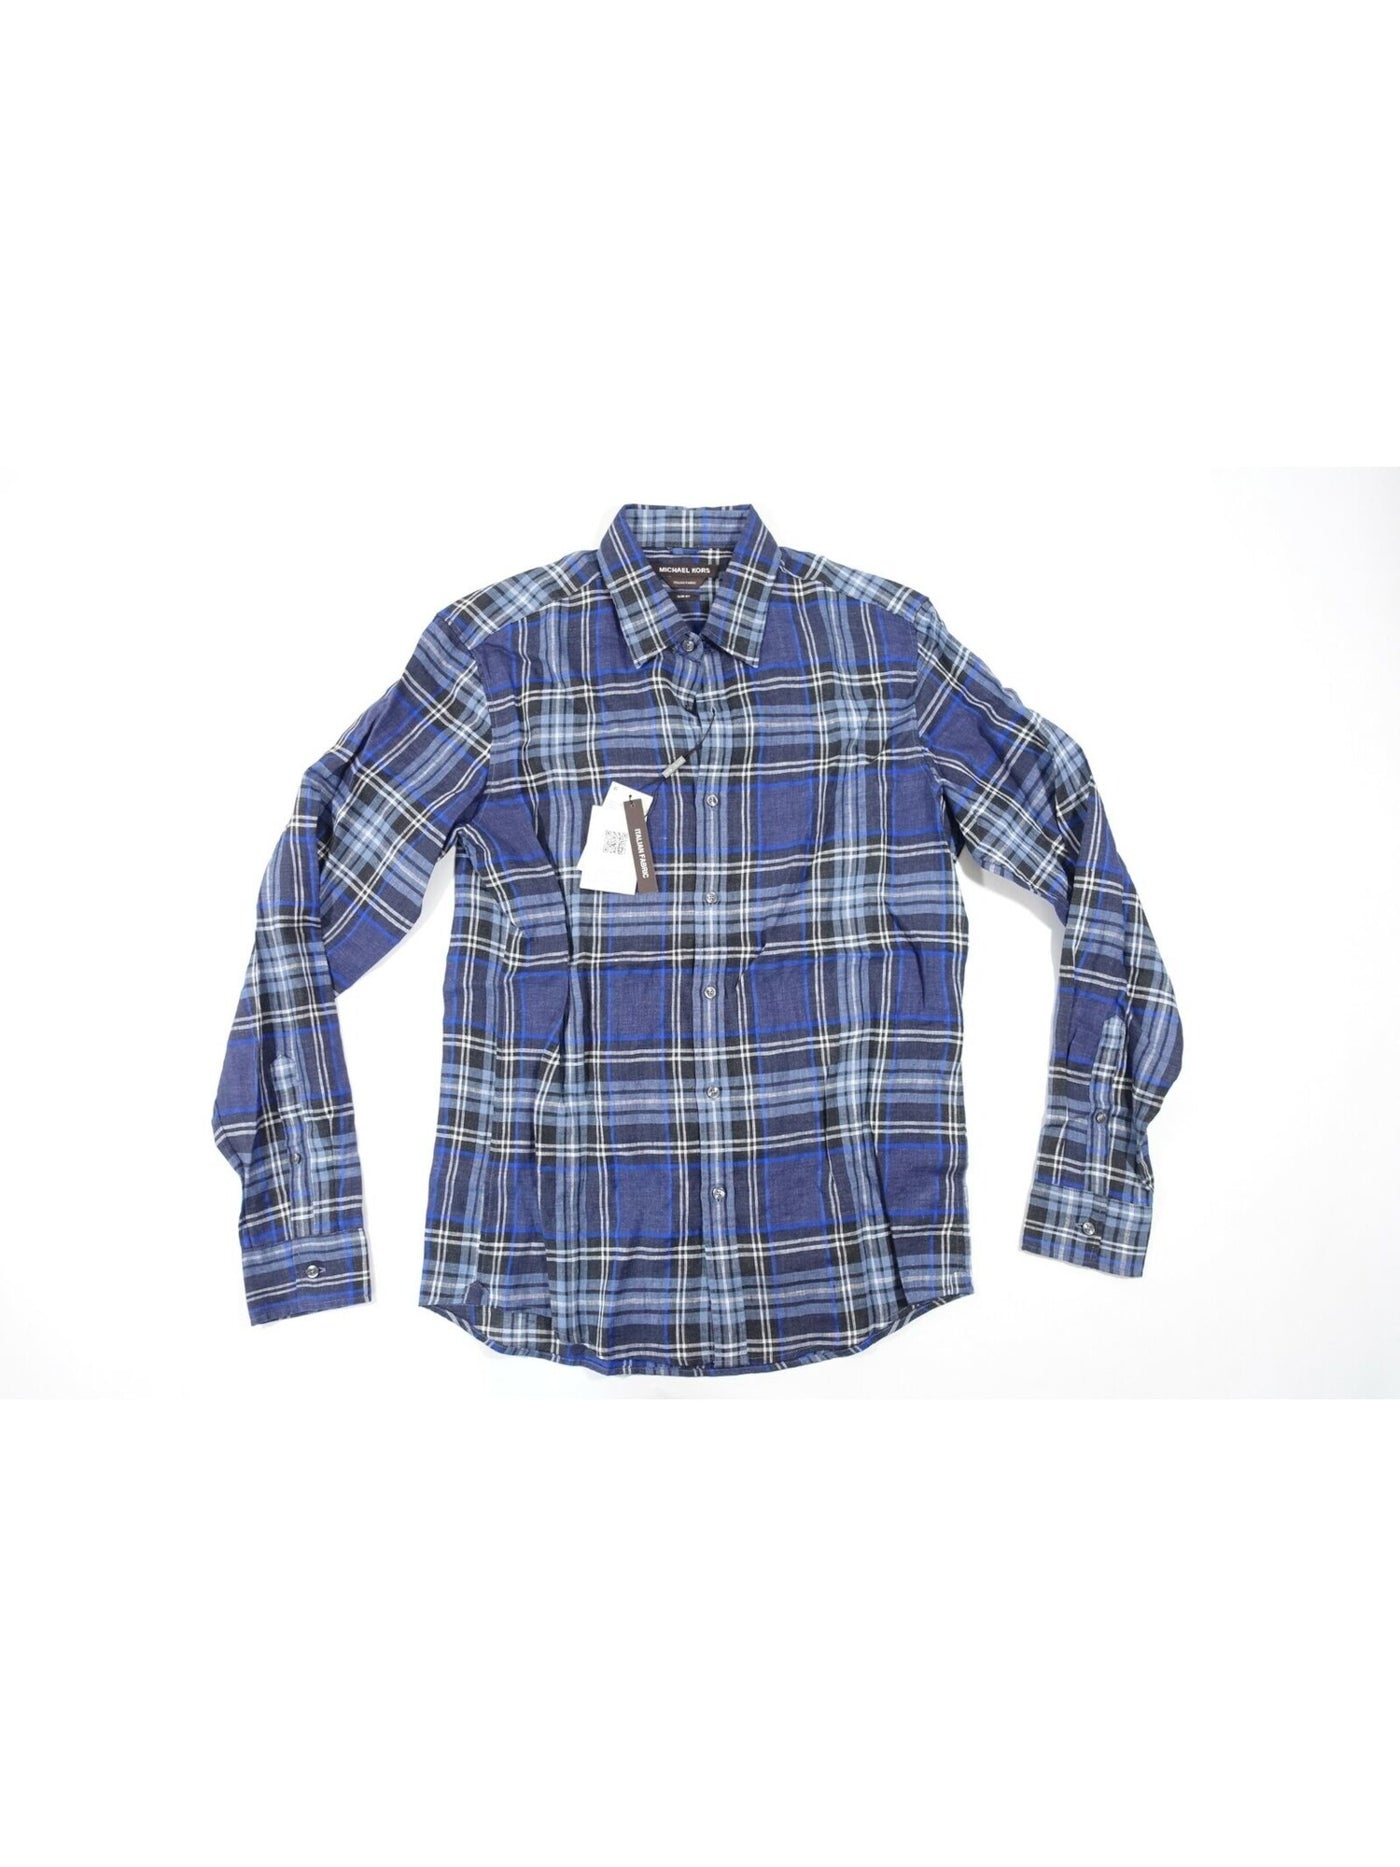 MICHAEL KORS Mens Blue Plaid Long Sleeve Collared Slim Fit Button Down Shirt L